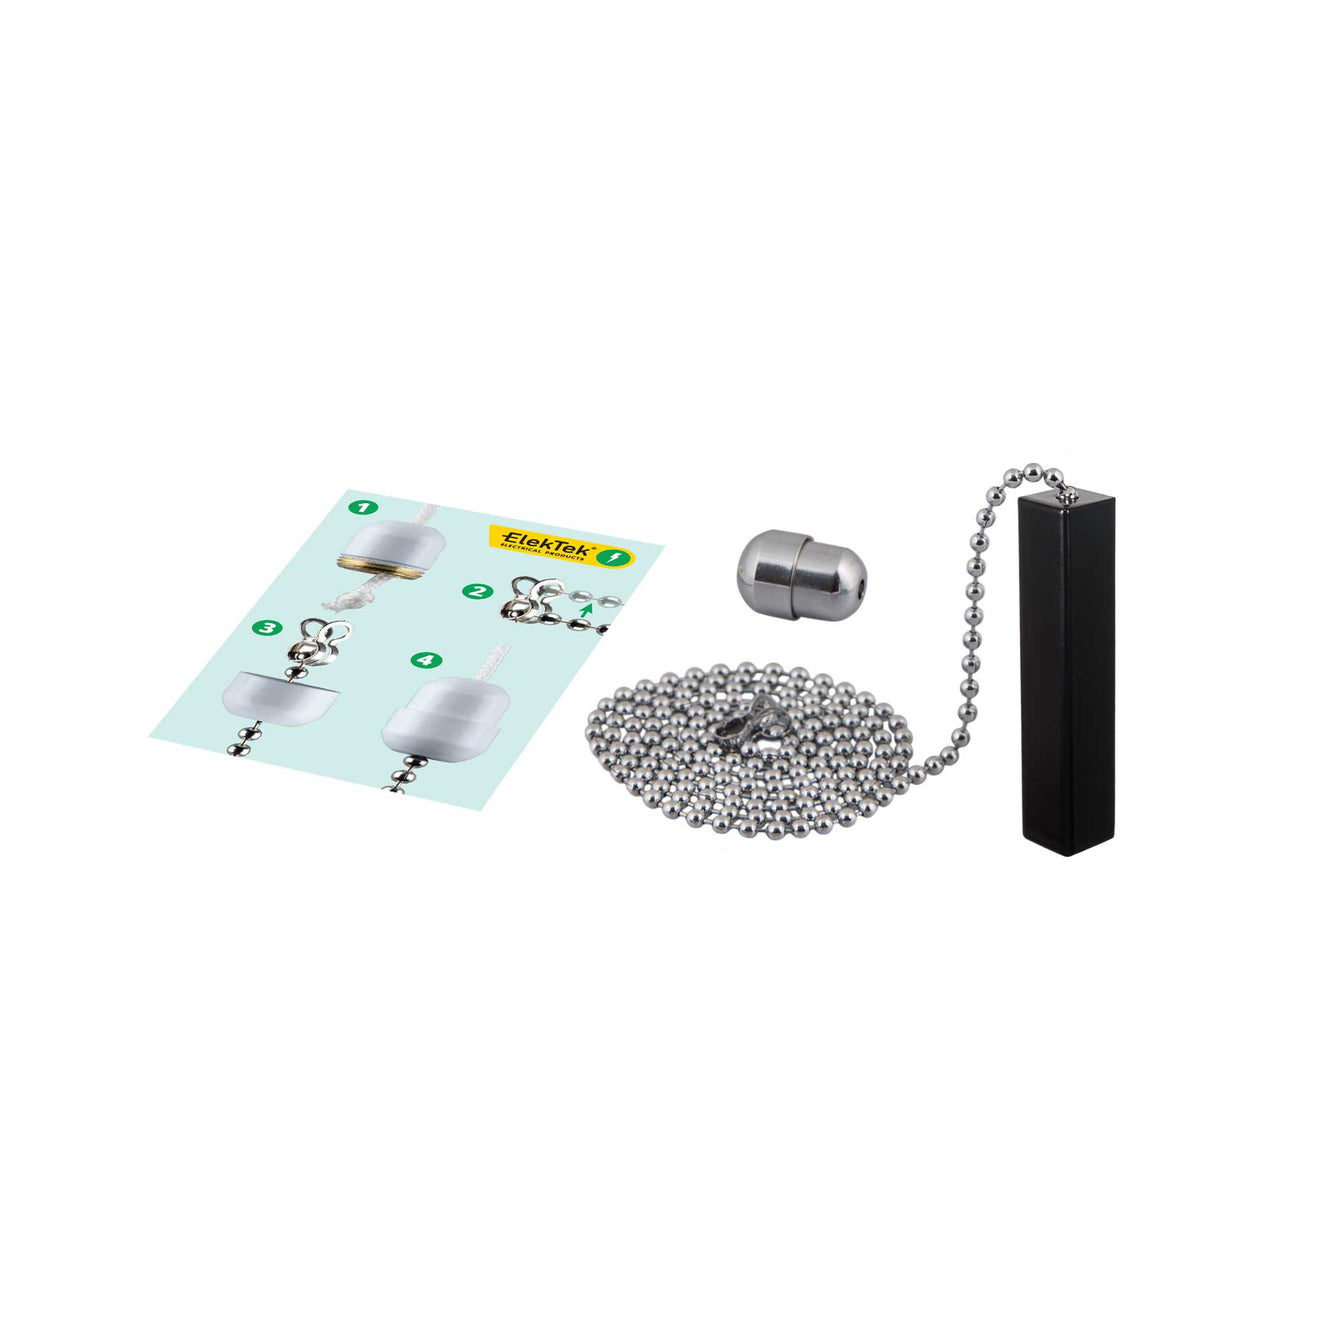 ElekTek Premium Black Bathroom Light Pull Cord Switch Kit with Pull Chain Handle Black Cylinder / Brass